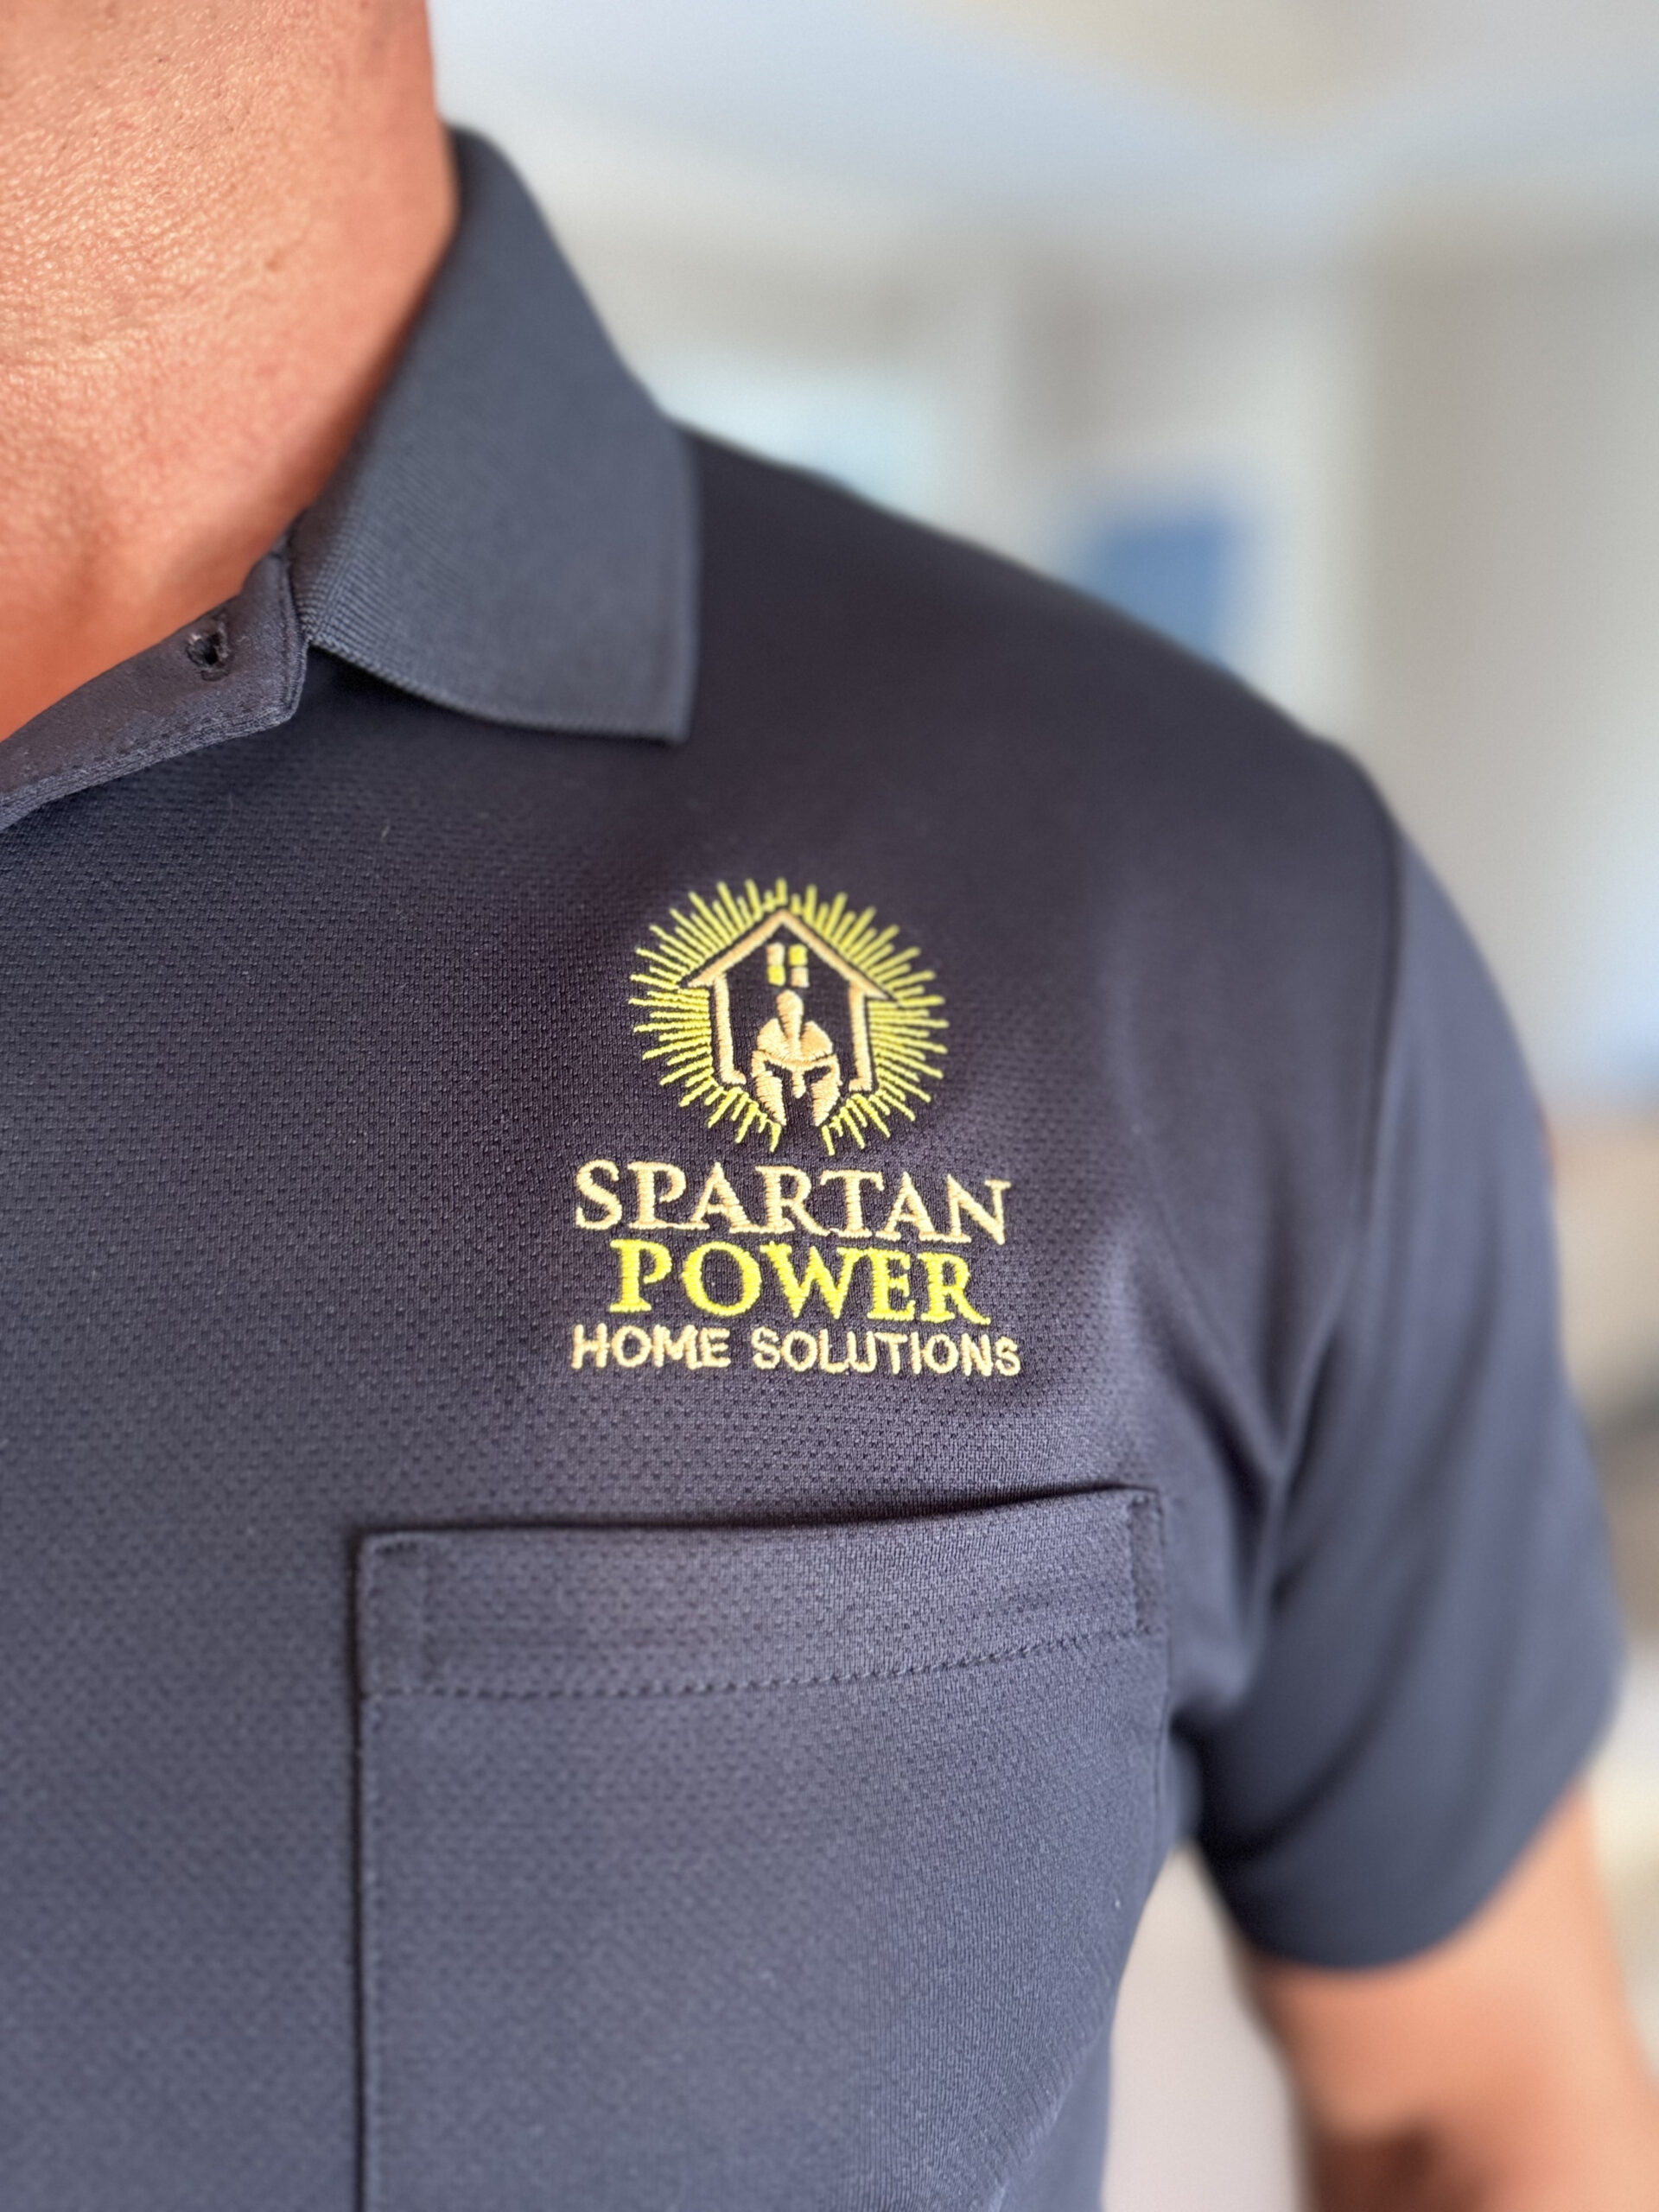 Spartan Power logo